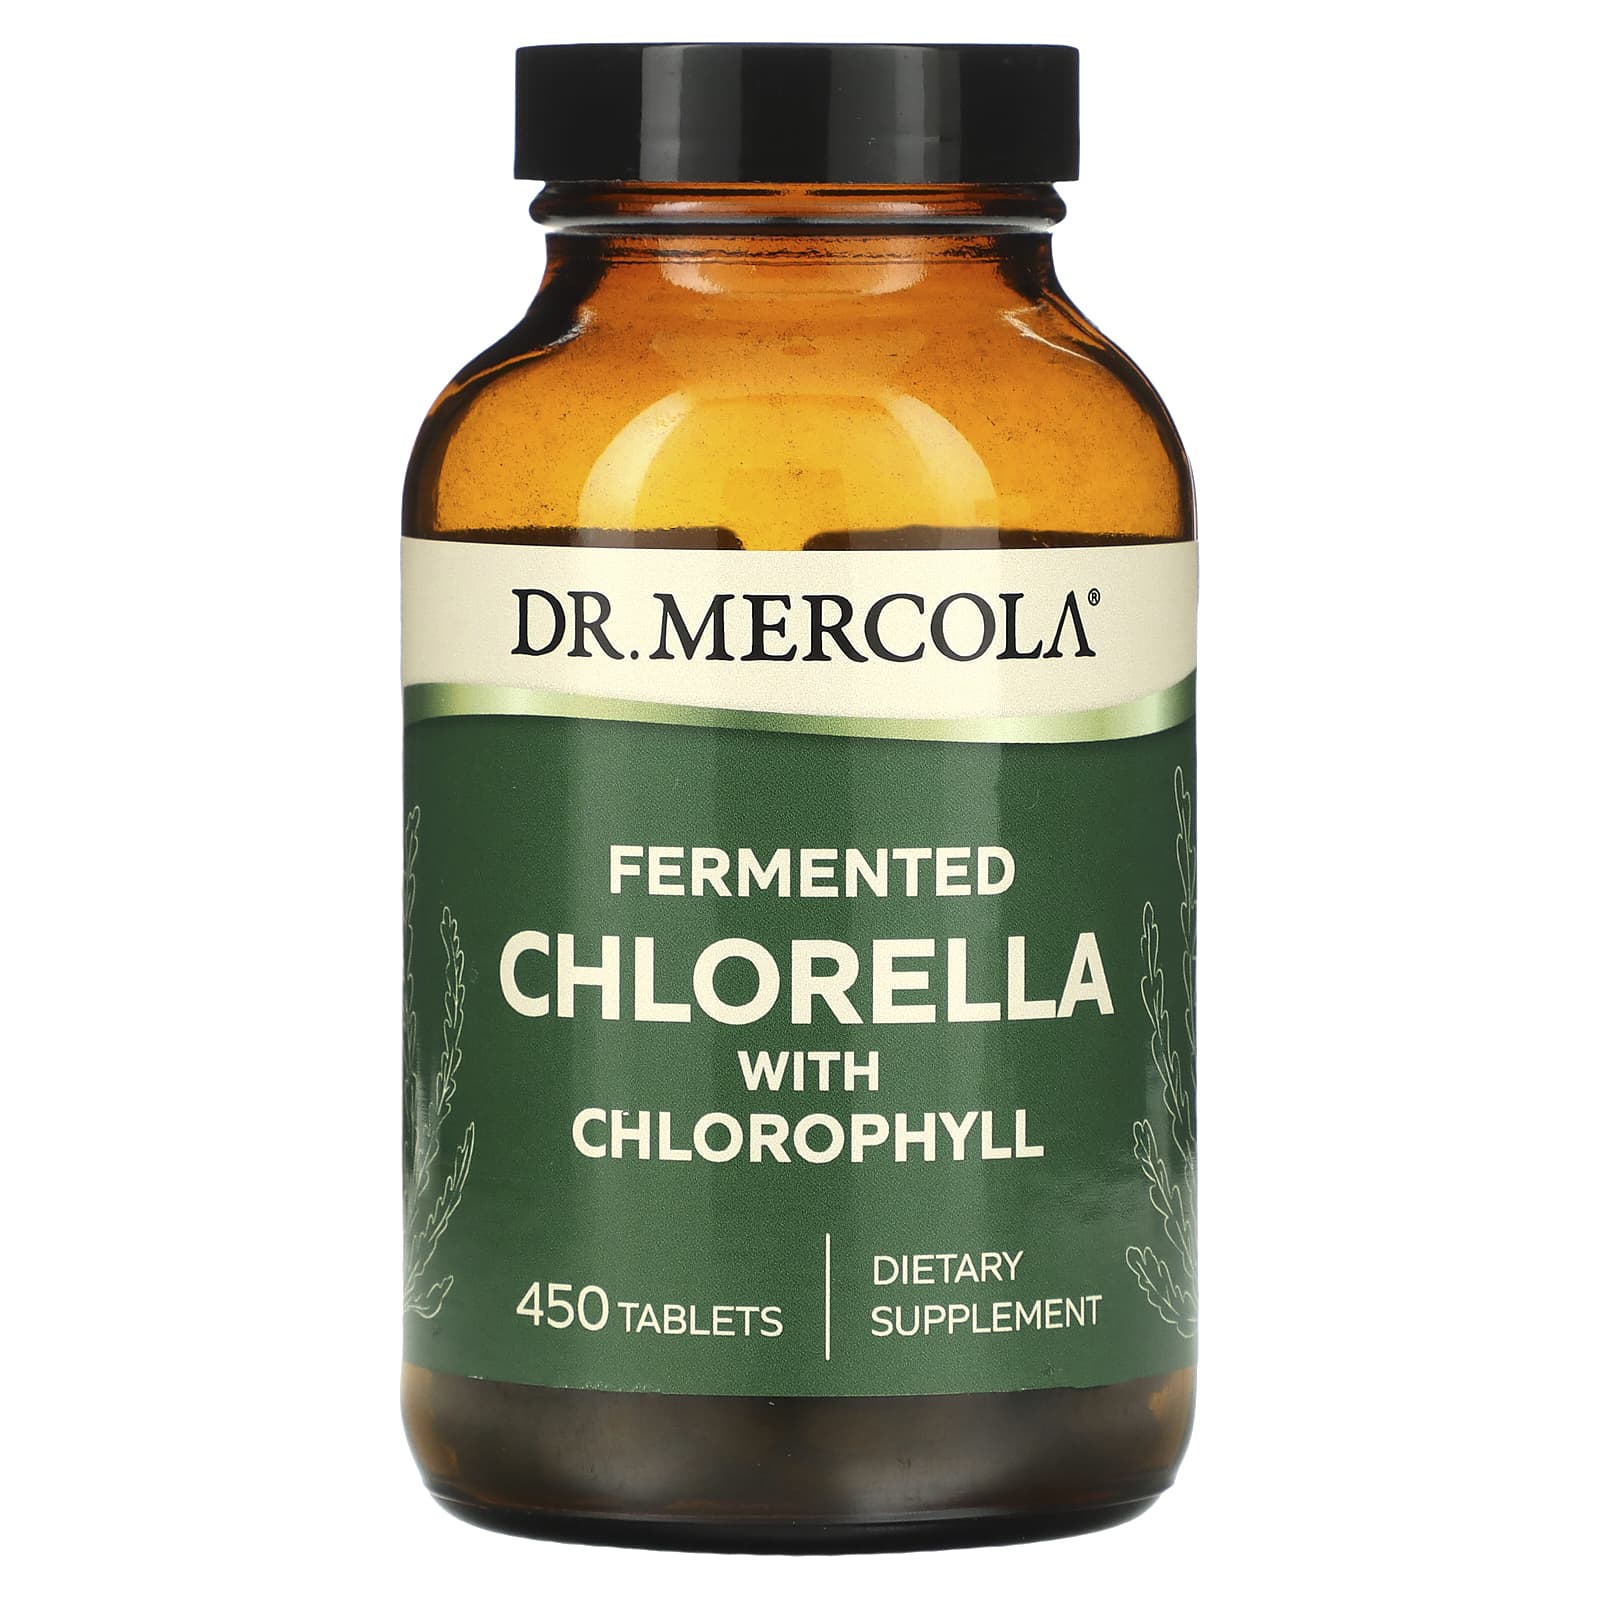 Dr. Mercola ферментированный экстракт хлореллы 450 таблеток